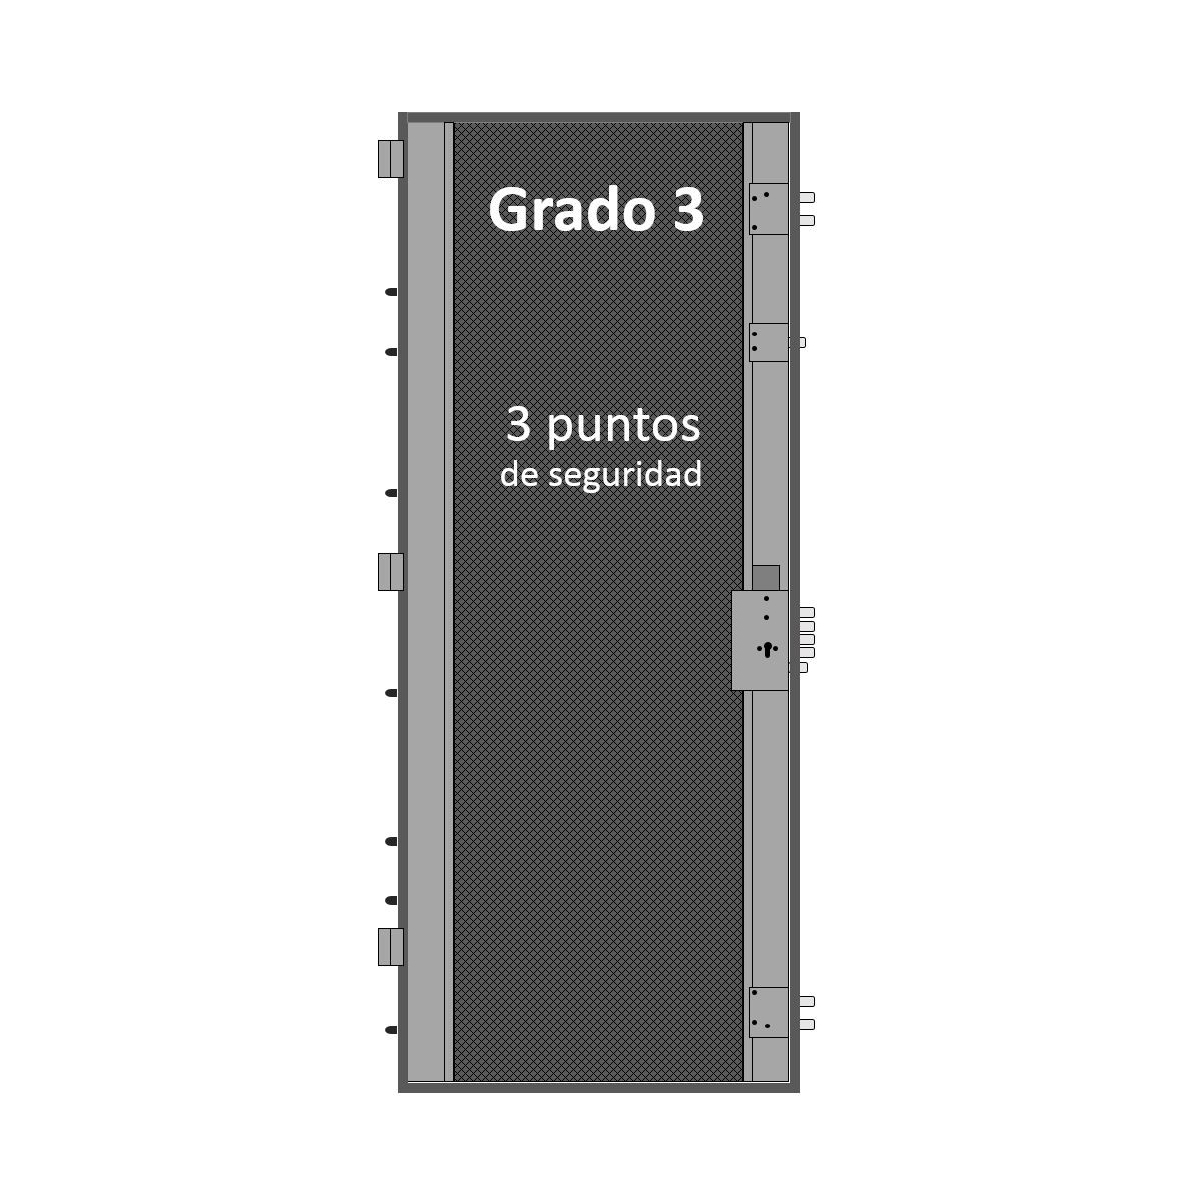 Puertas acorazadas Serie Omega Cearco - Puerta Acorazada 90cm grado 3 Triana Omega